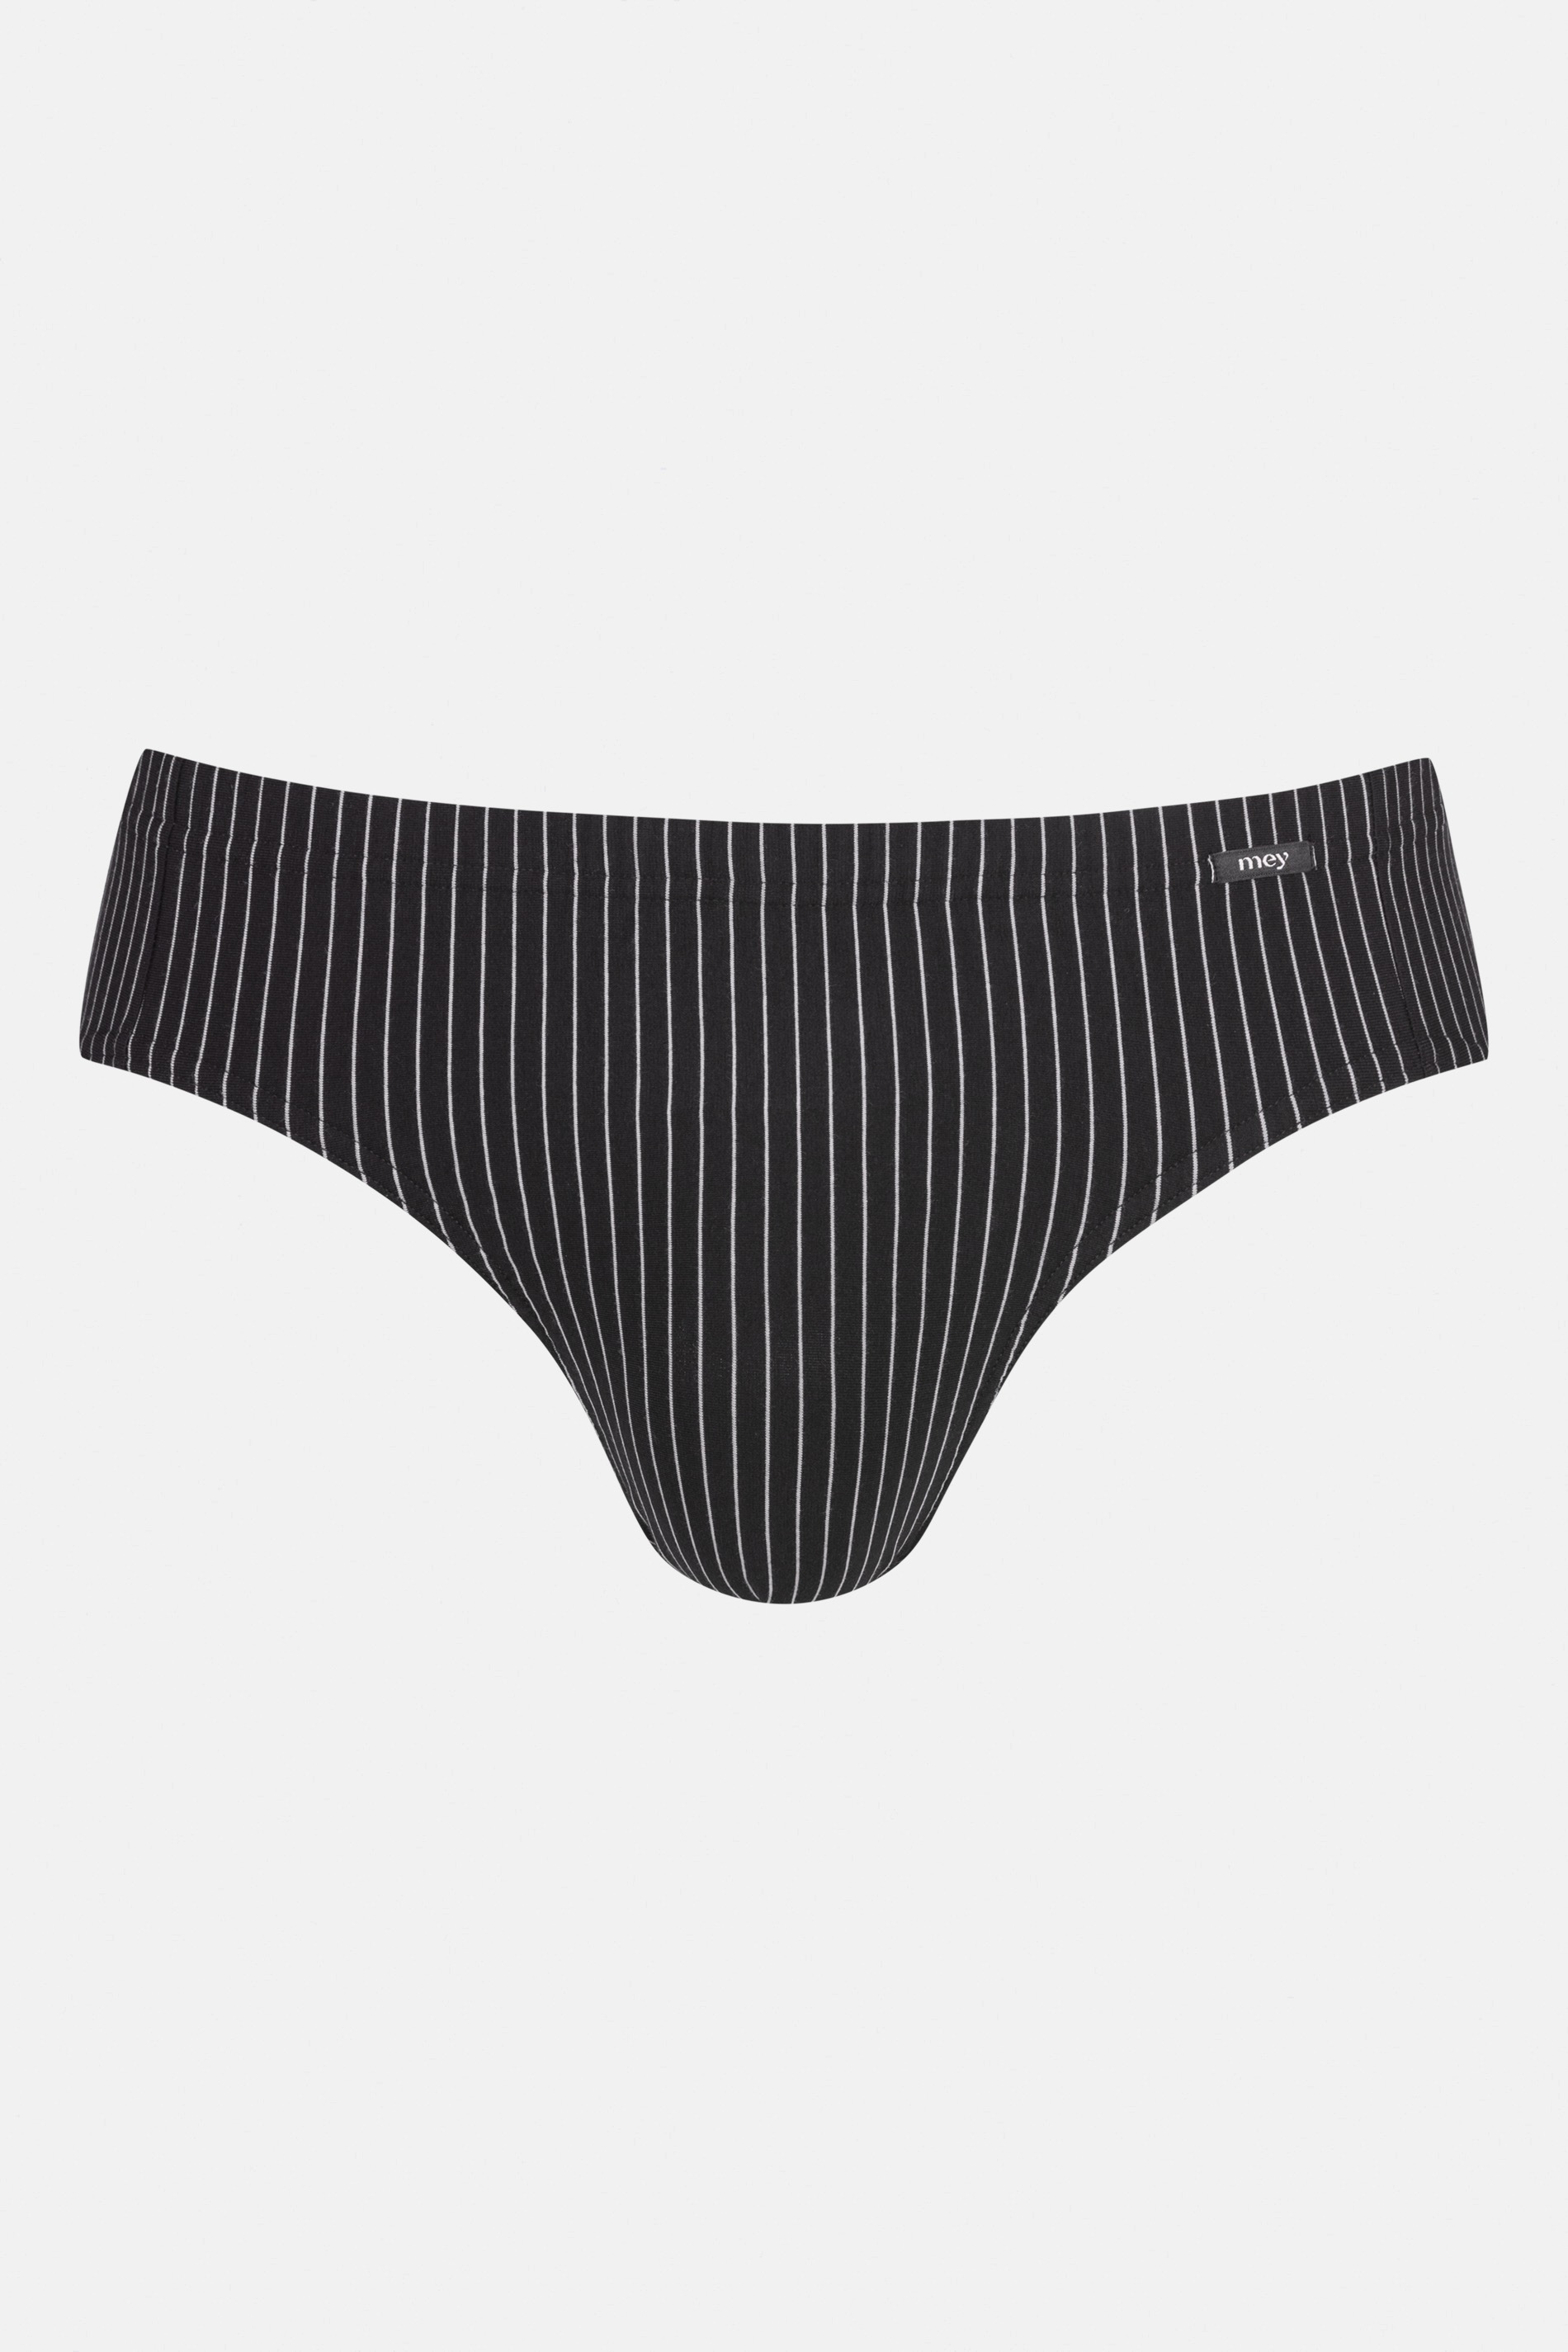 Jazz Pants Serie BC Stripes Freisteller | mey®